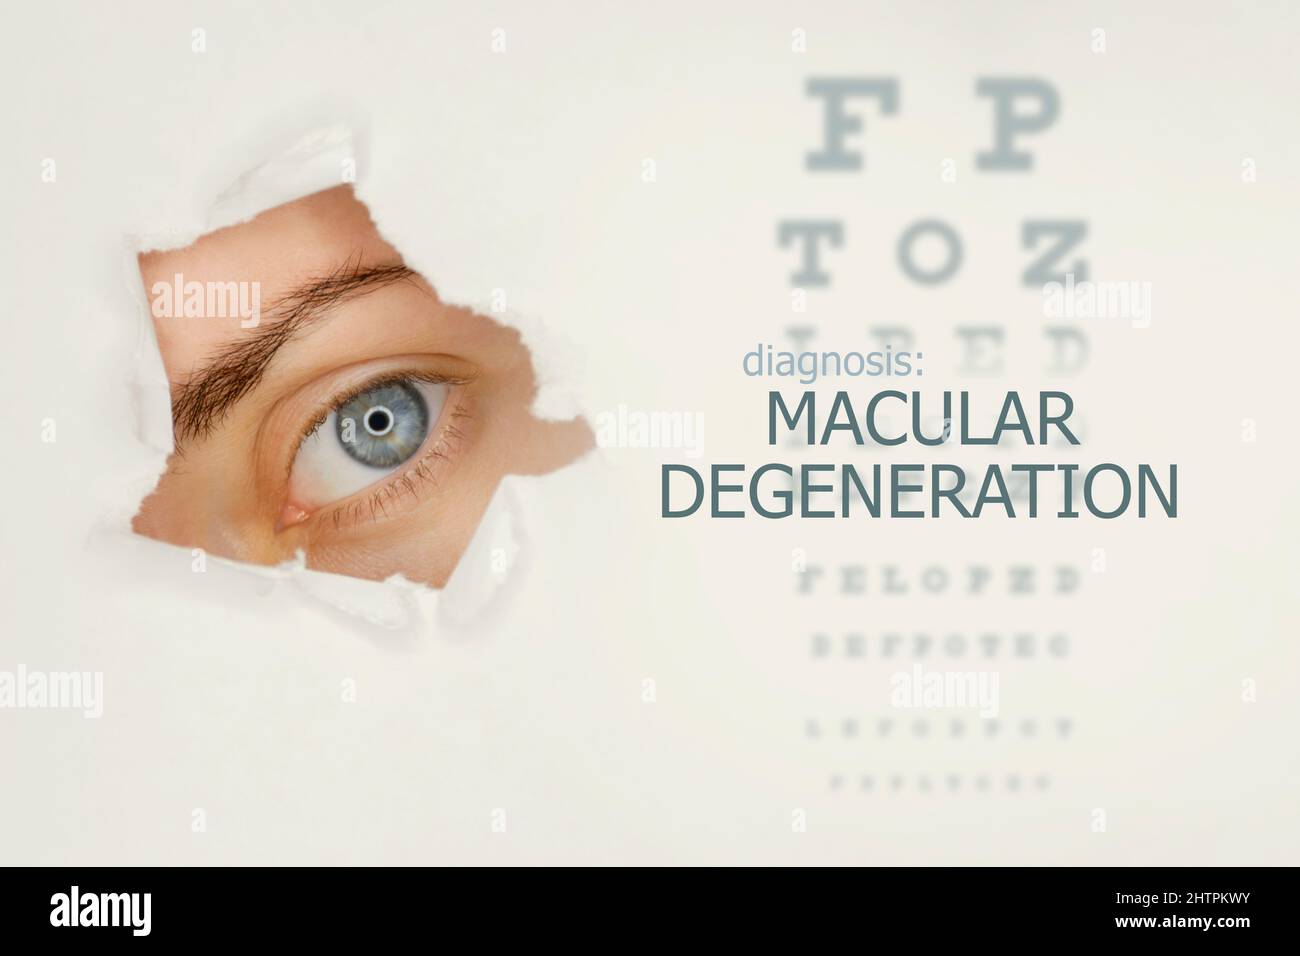 Macular degeneration disease poster with eye test chart and blue eye. Studio grey background Stock Photo